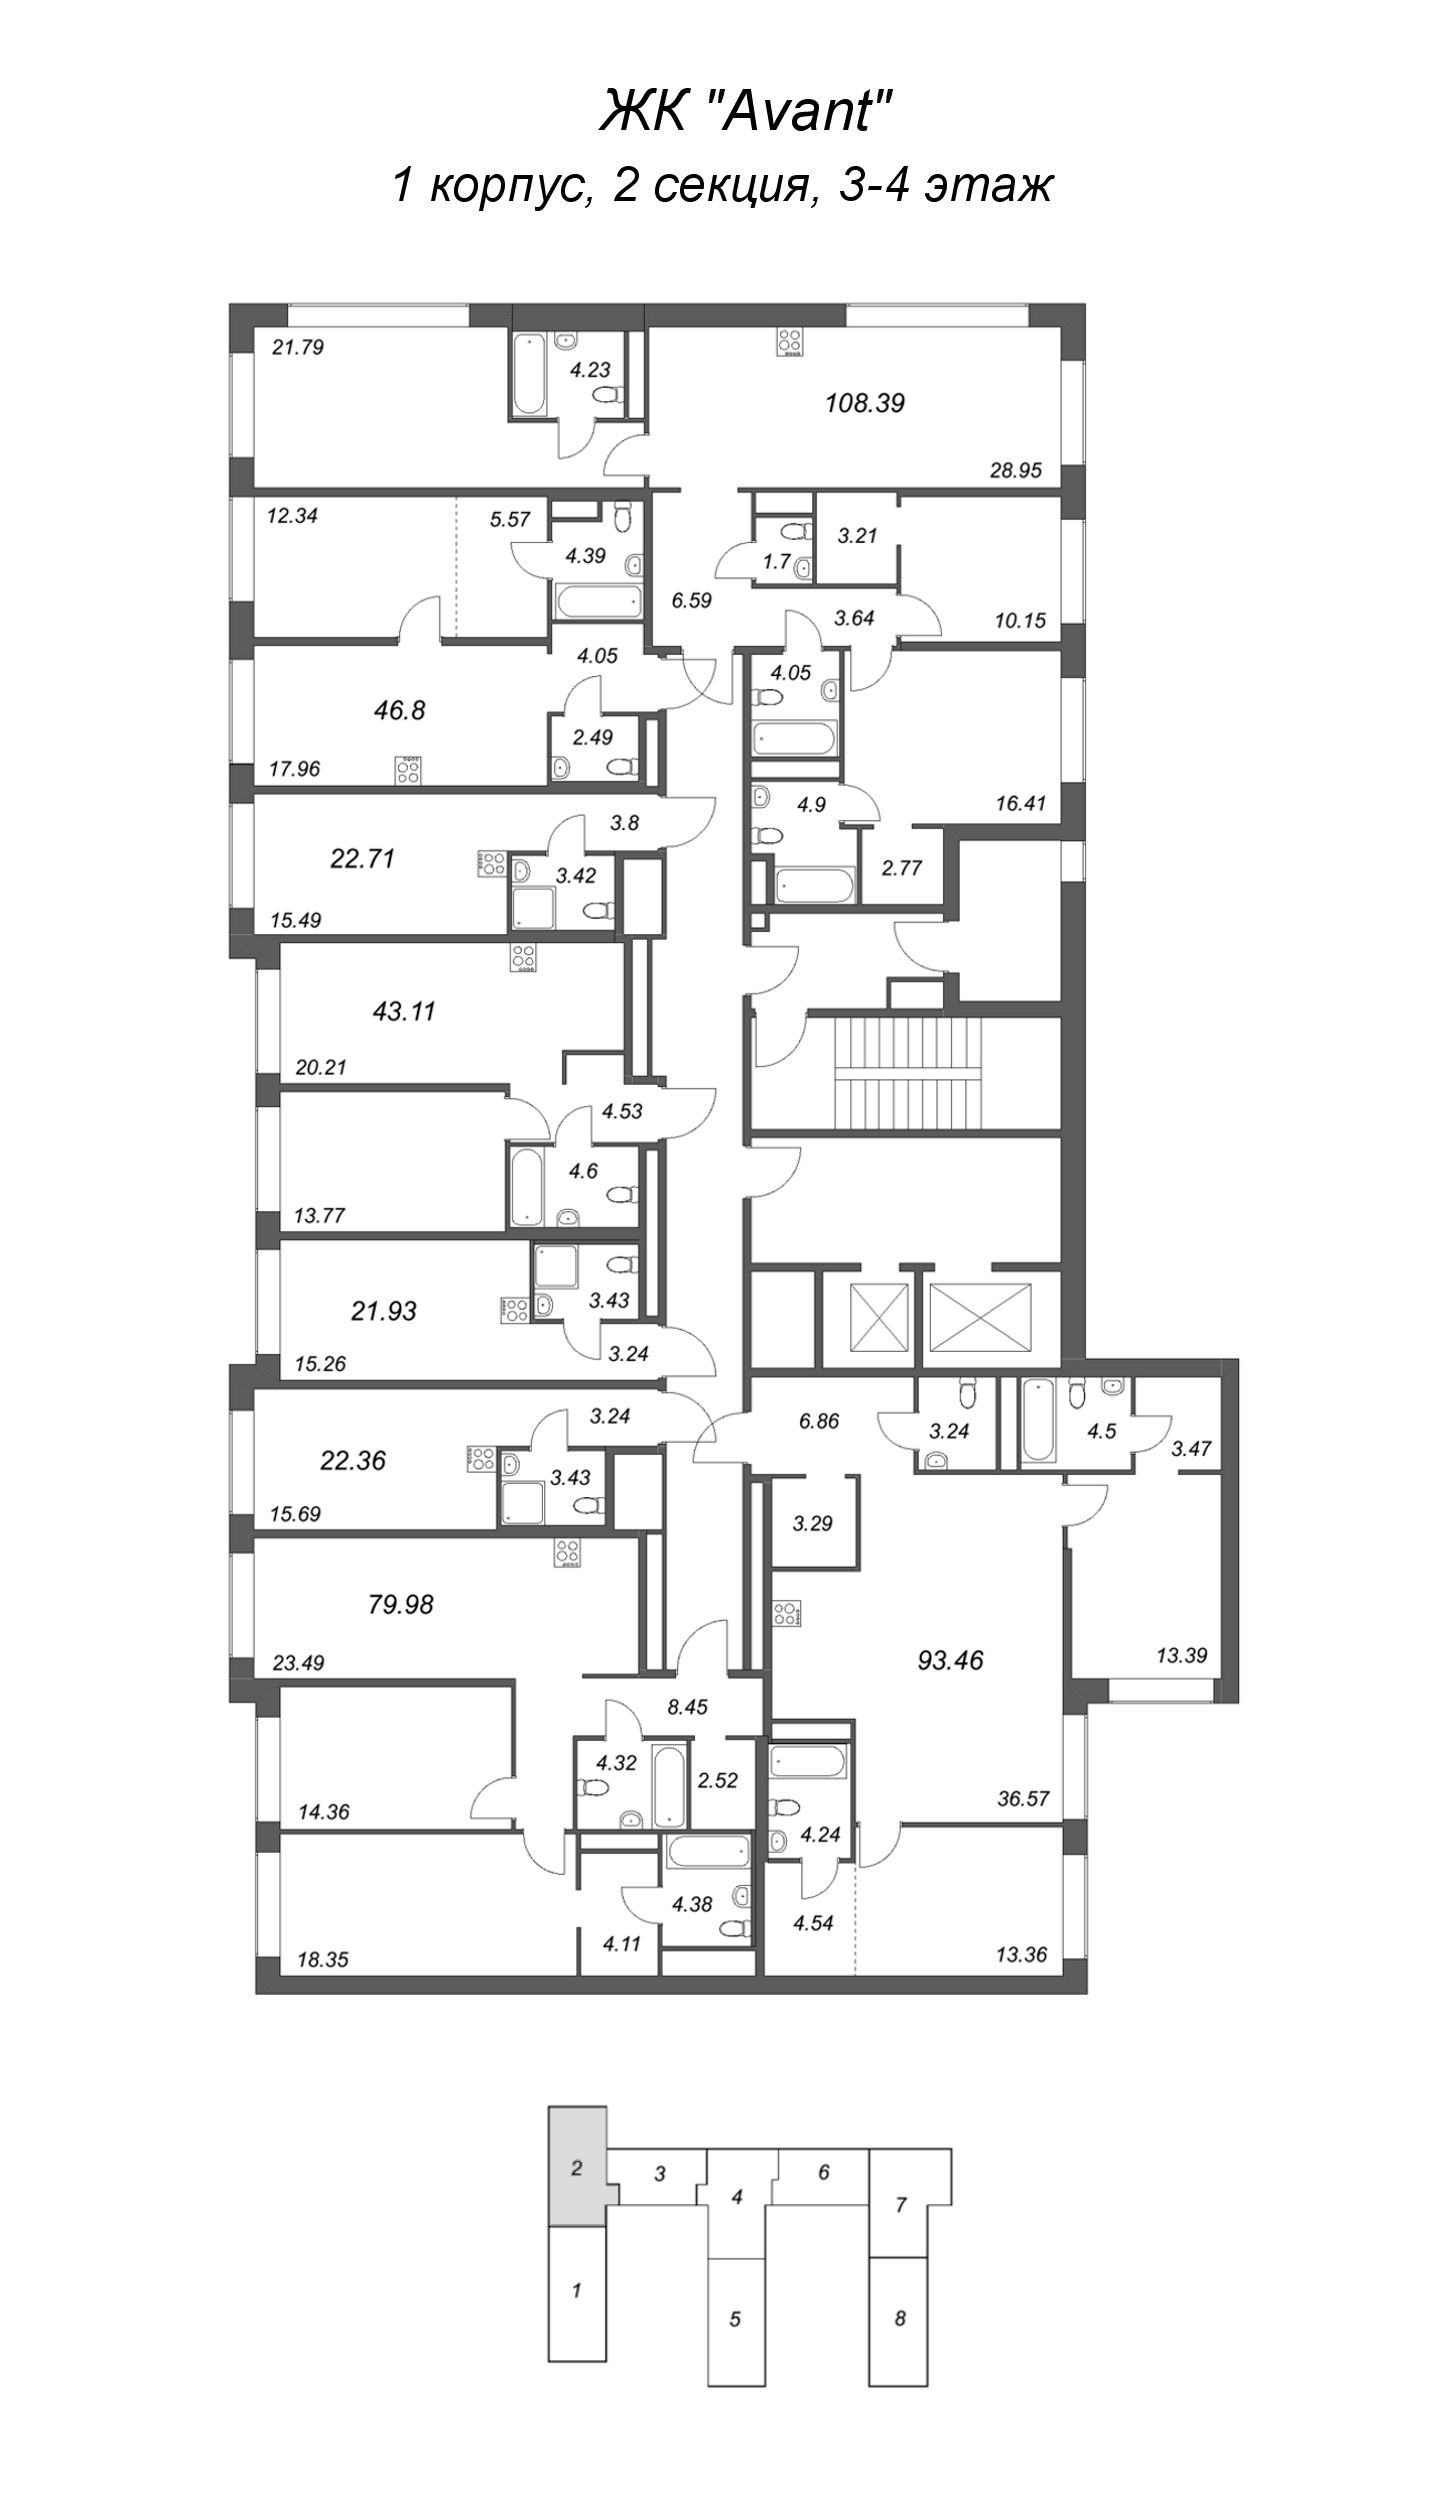 4-комнатная (Евро) квартира, 108.39 м² - планировка этажа